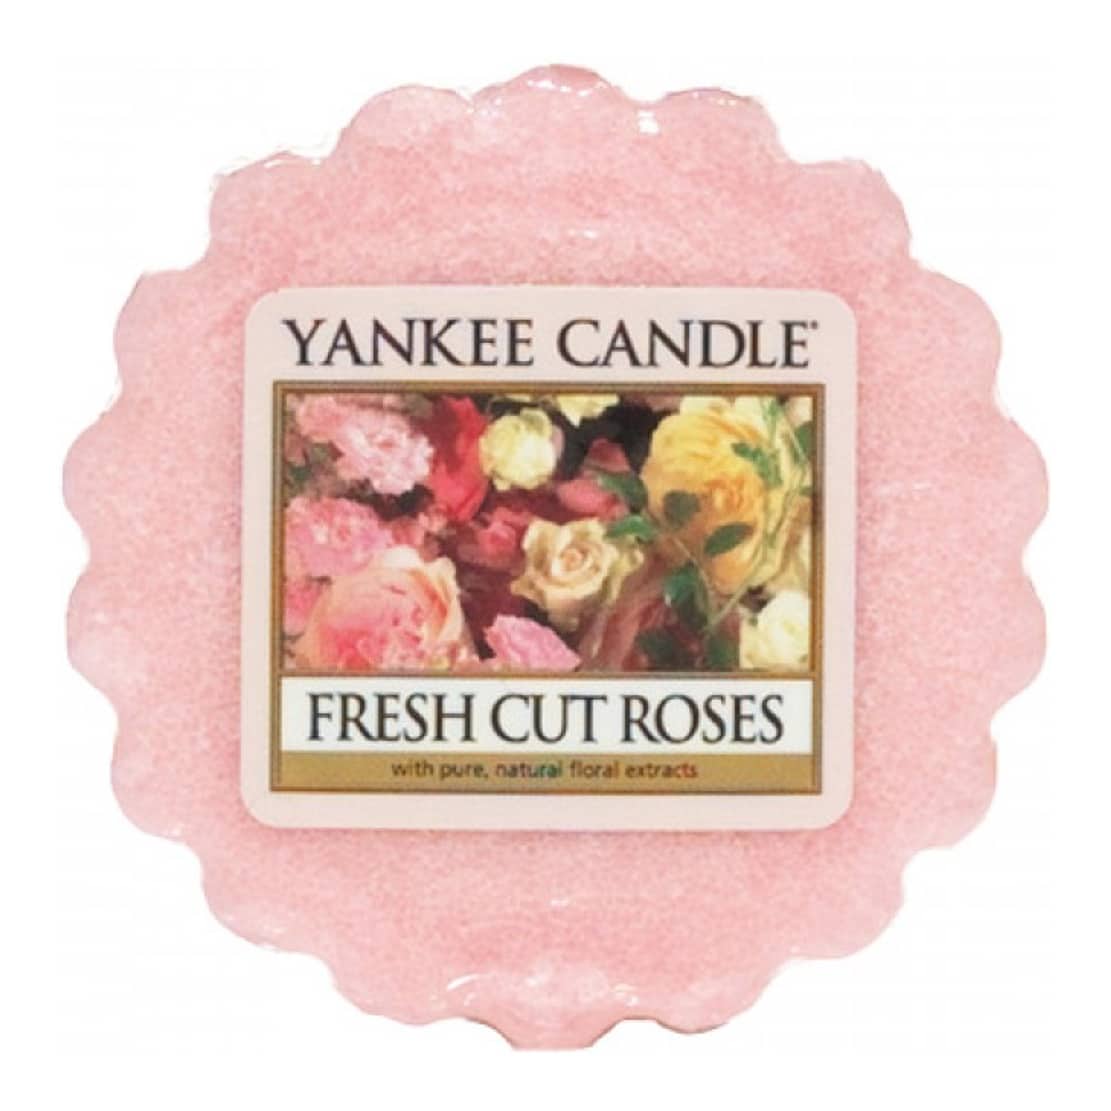 Yankee Candle Fresh Cut Roses Wax Melt Tart